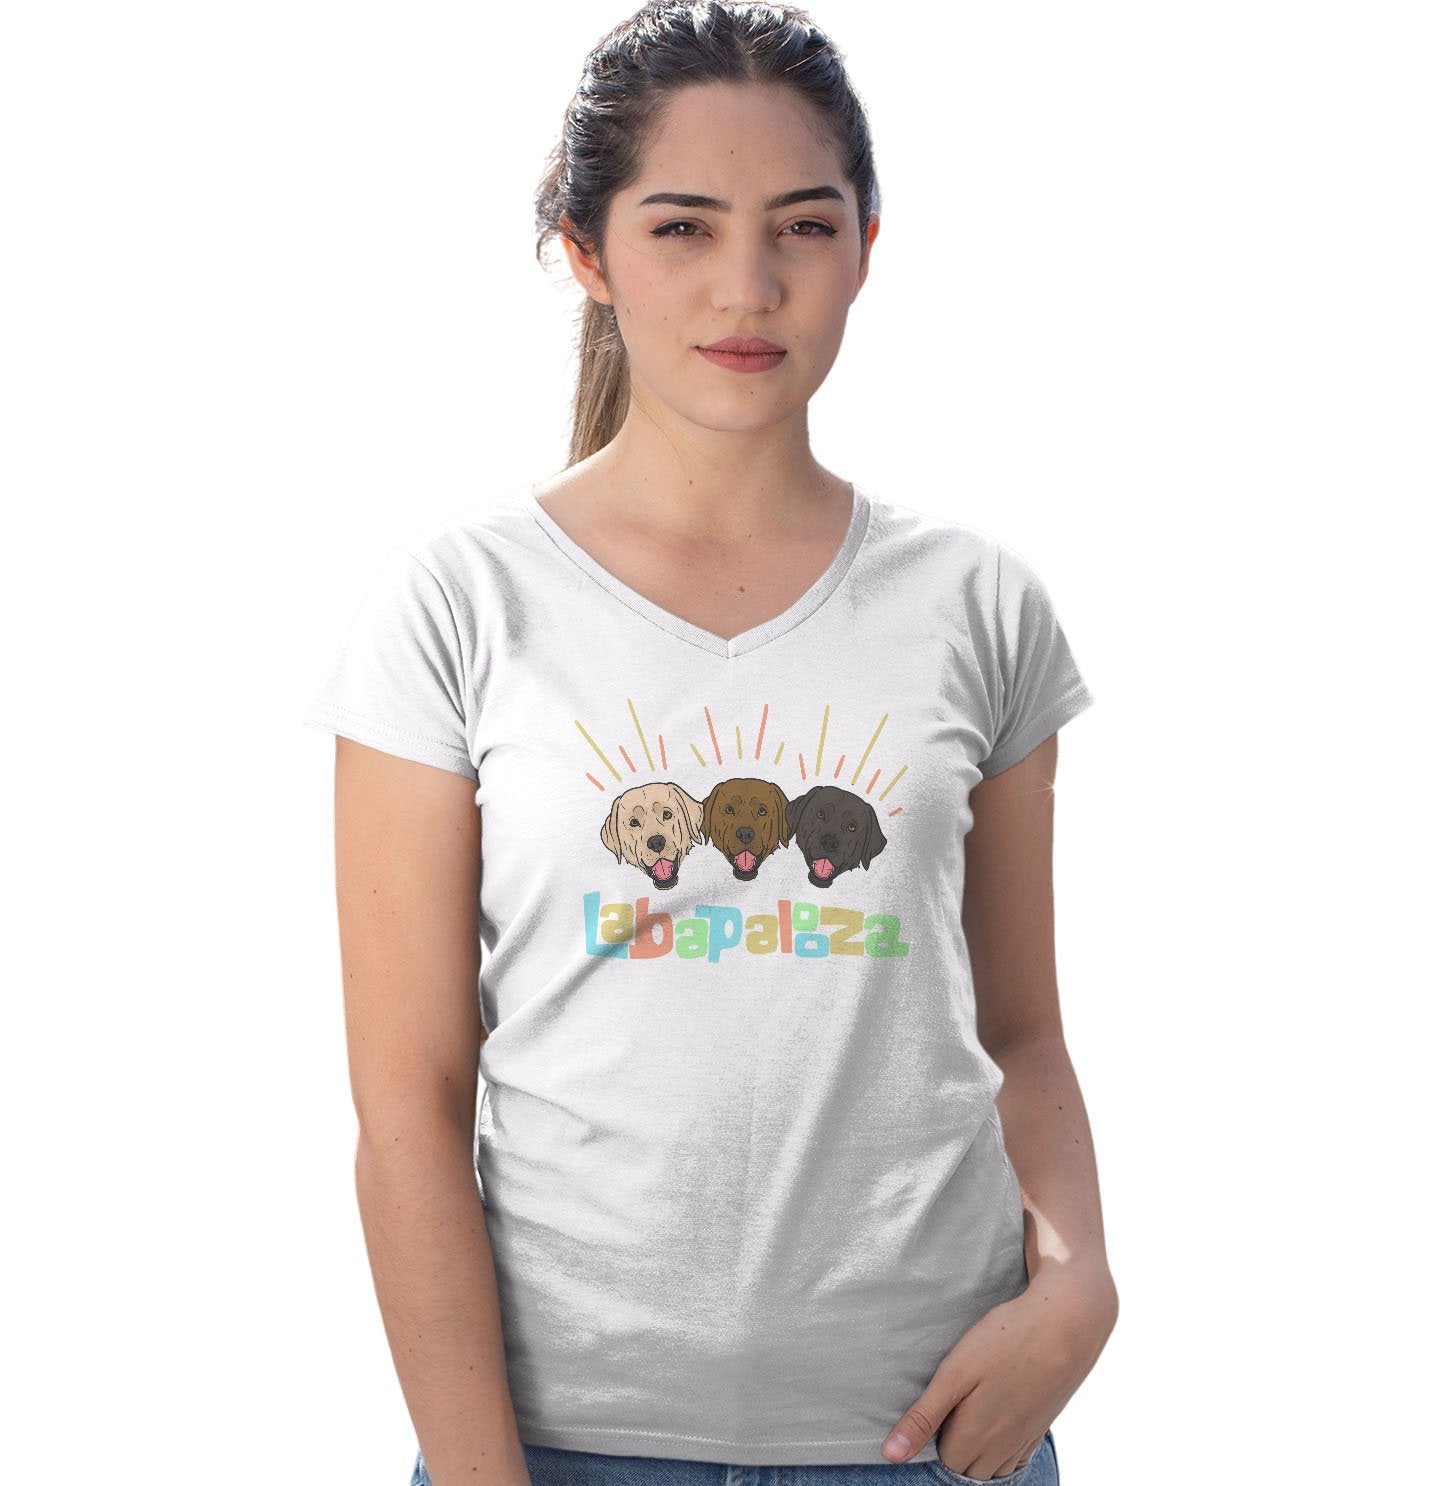 Labapalooza - Women's V-Neck T-Shirt